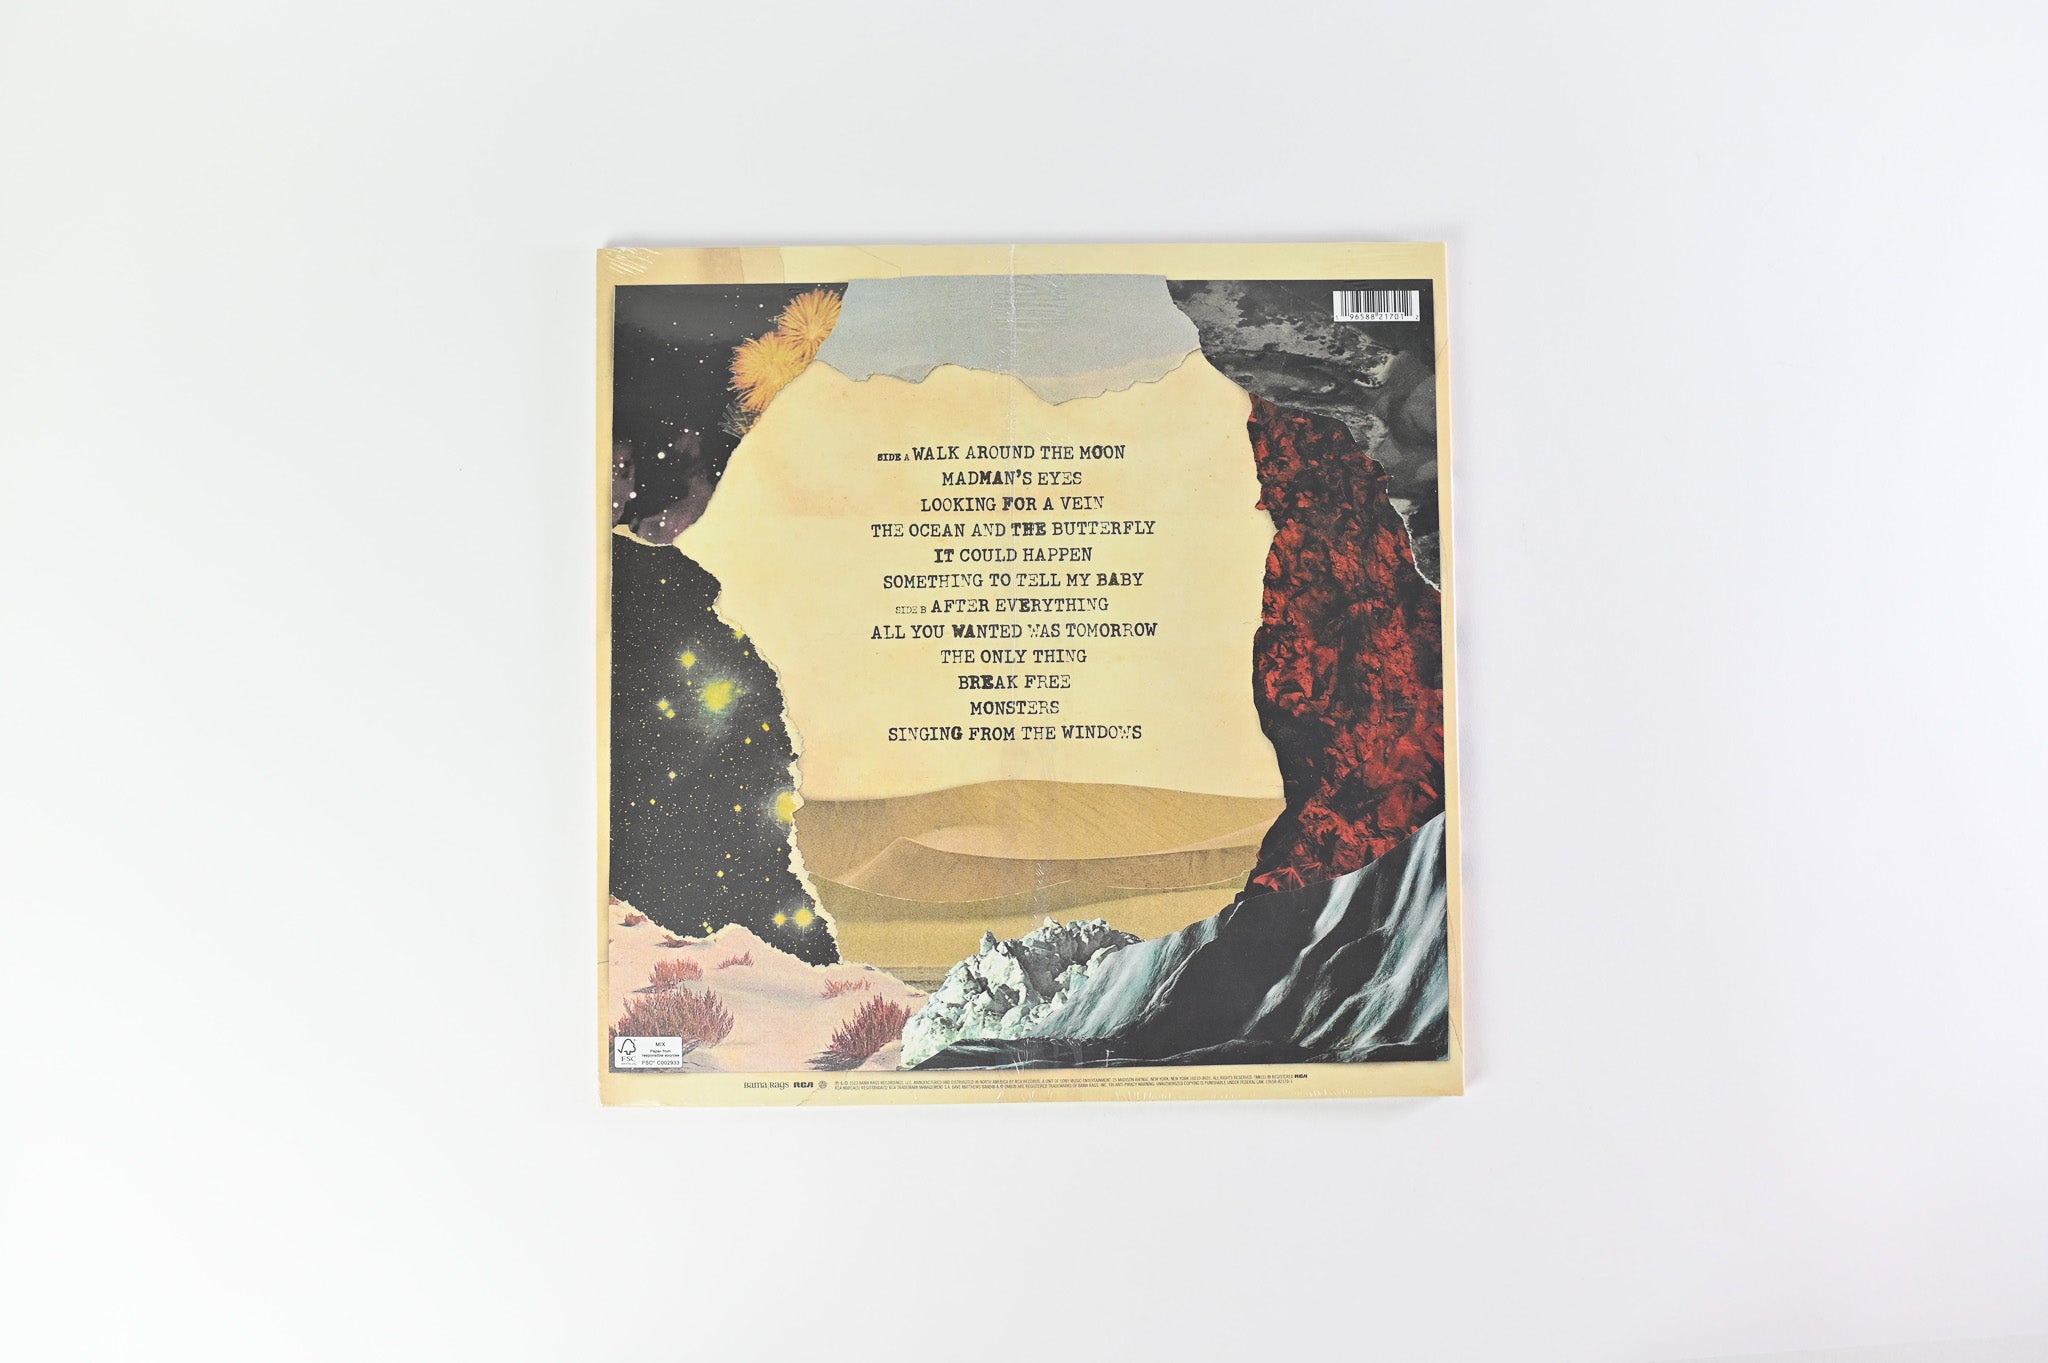 Dave Matthews Band - Walk Around The Moon on RCA / Bama Rags